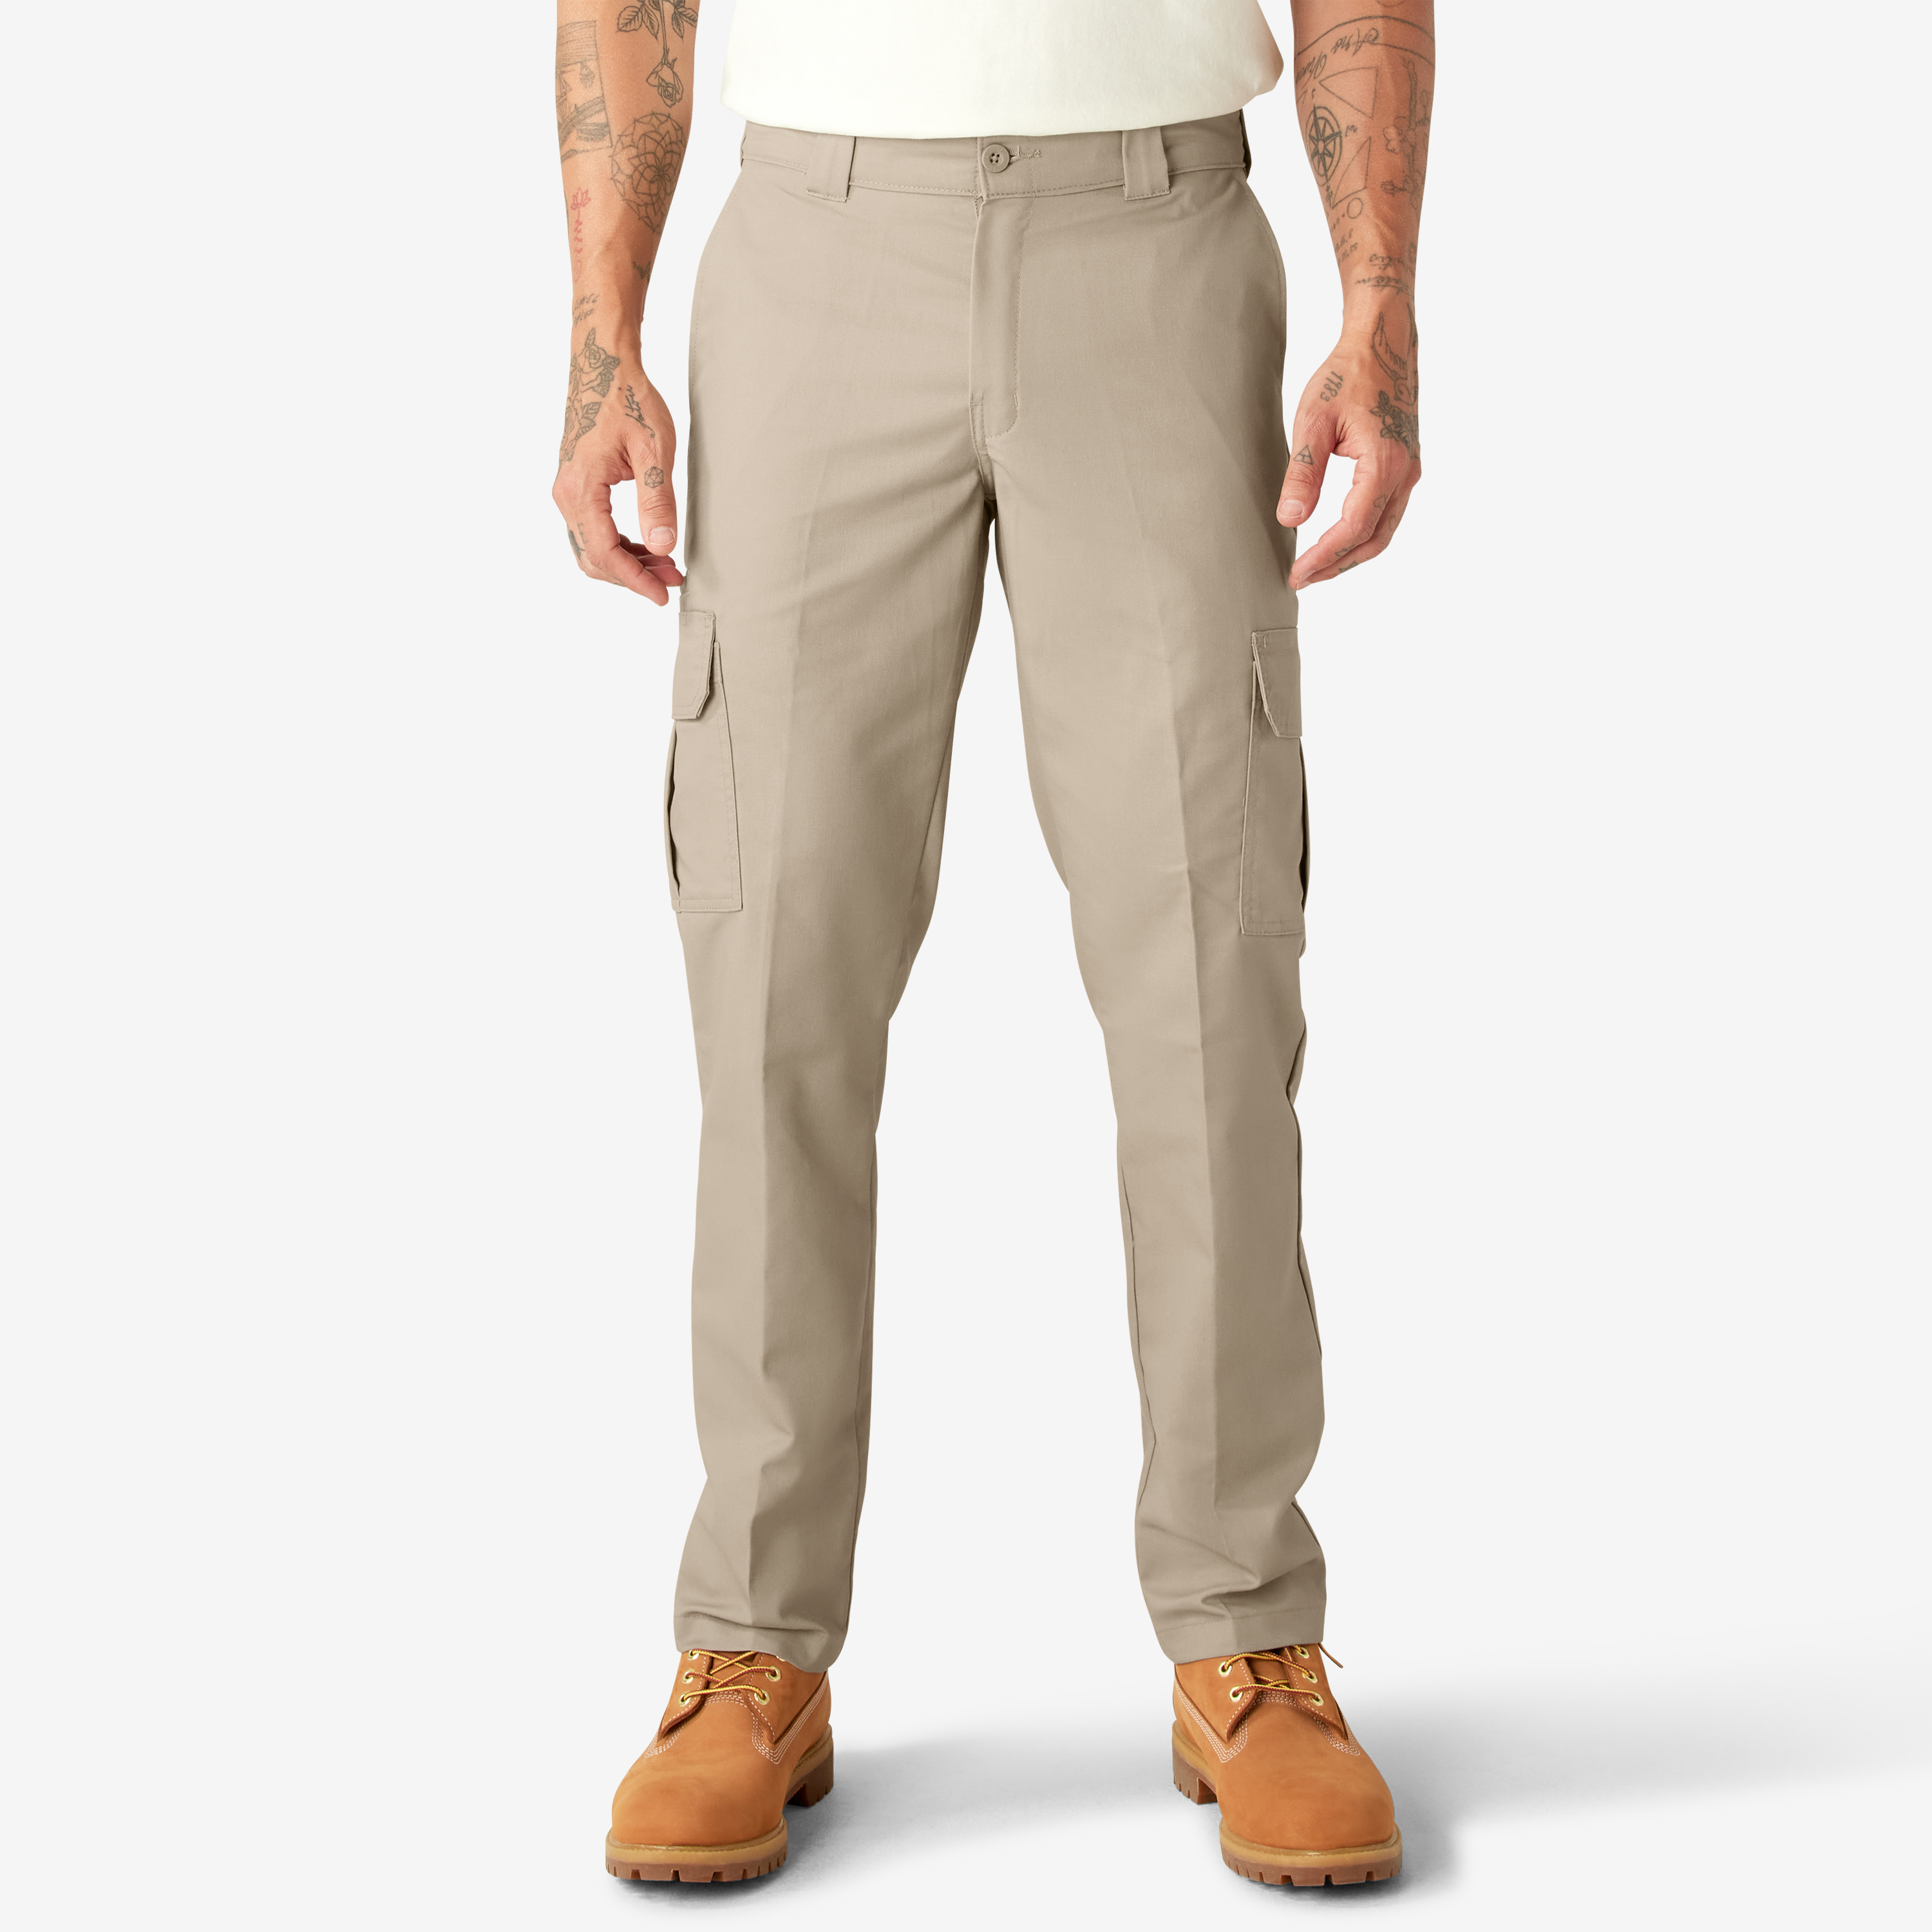 Aliexpress.com : Buy RUBU New Design Casual Men pants